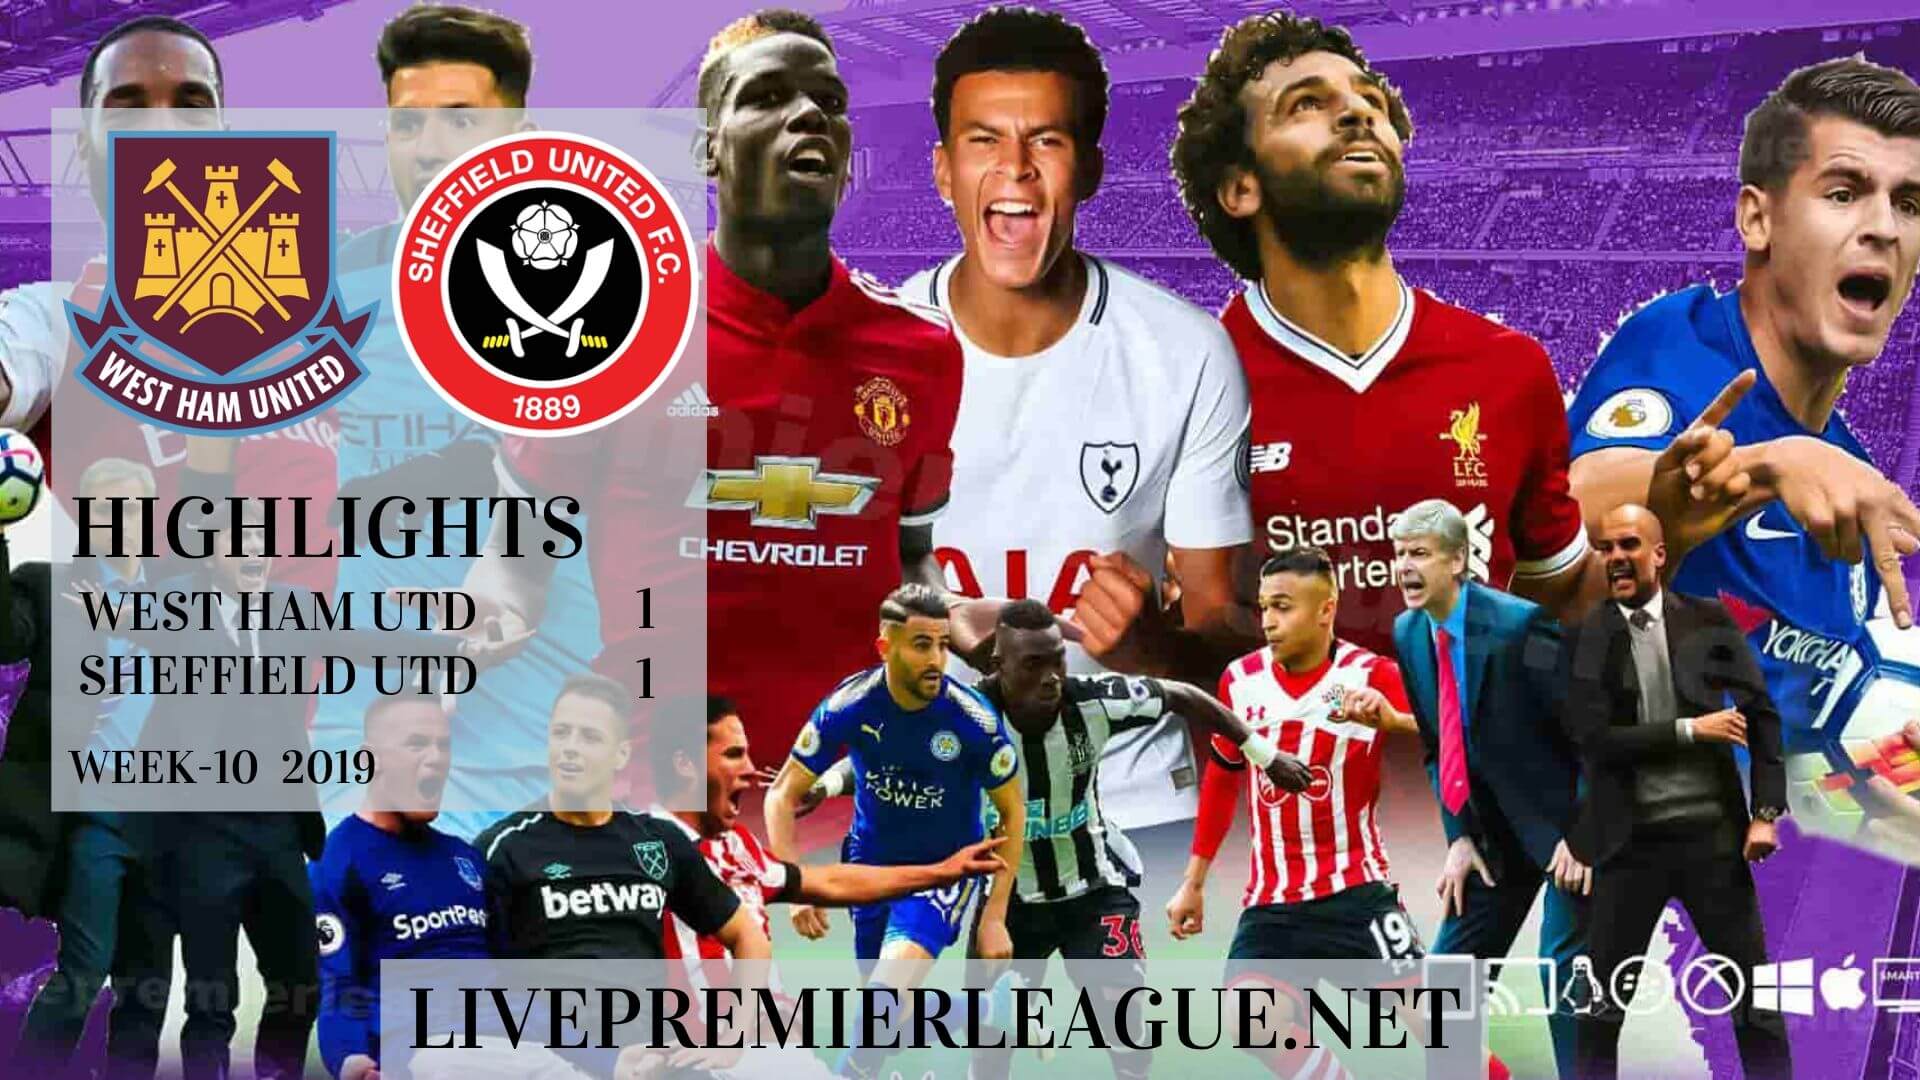 West Ham United vs Sheffield United Highlights 2019 Week 10